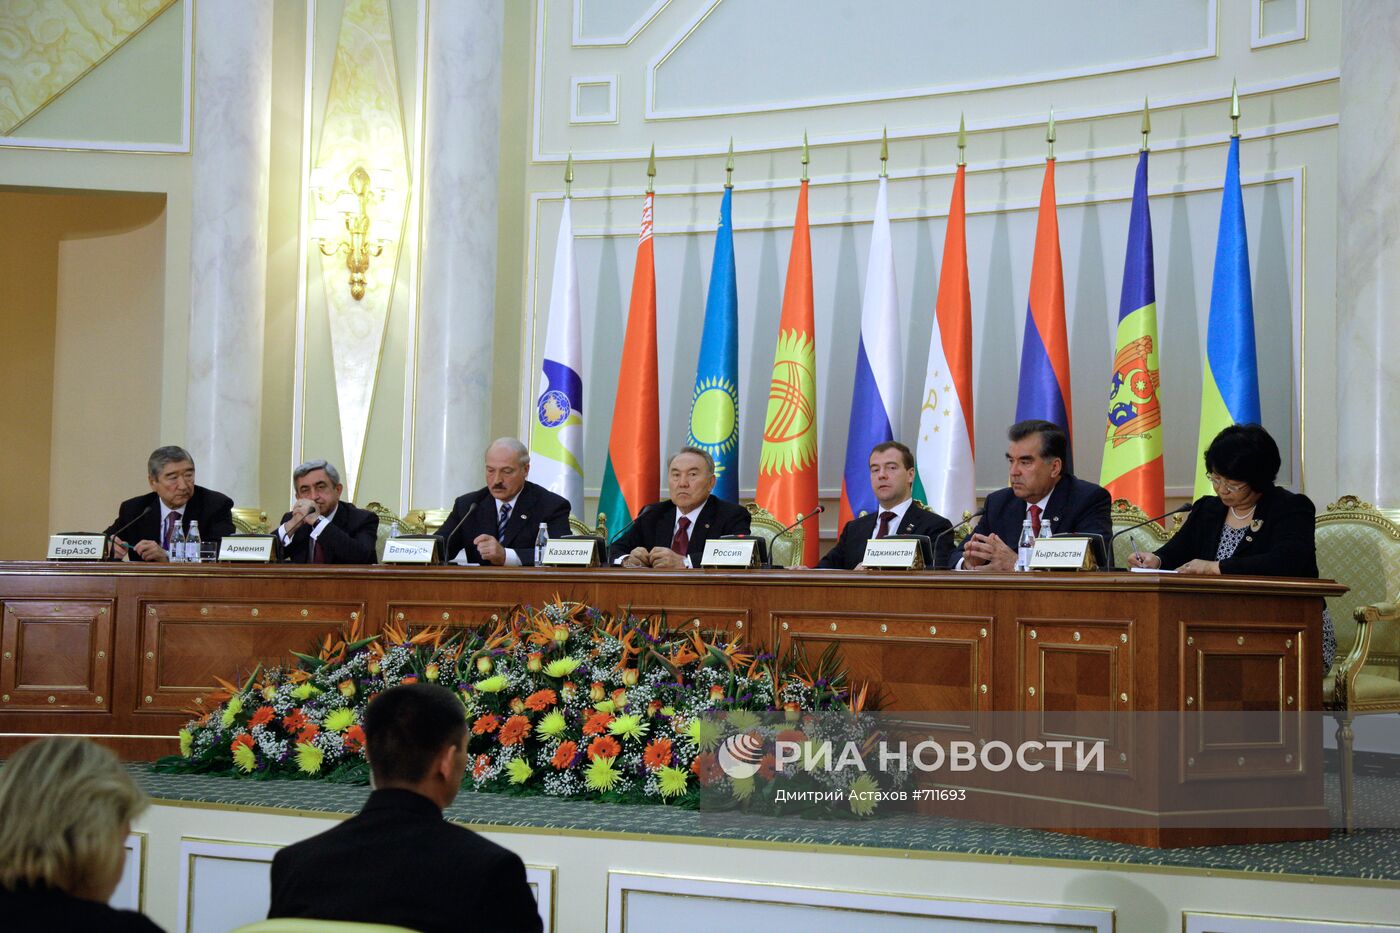 Дмитрий Медведев принял участие в саммите ЕврАзЭС в Астане